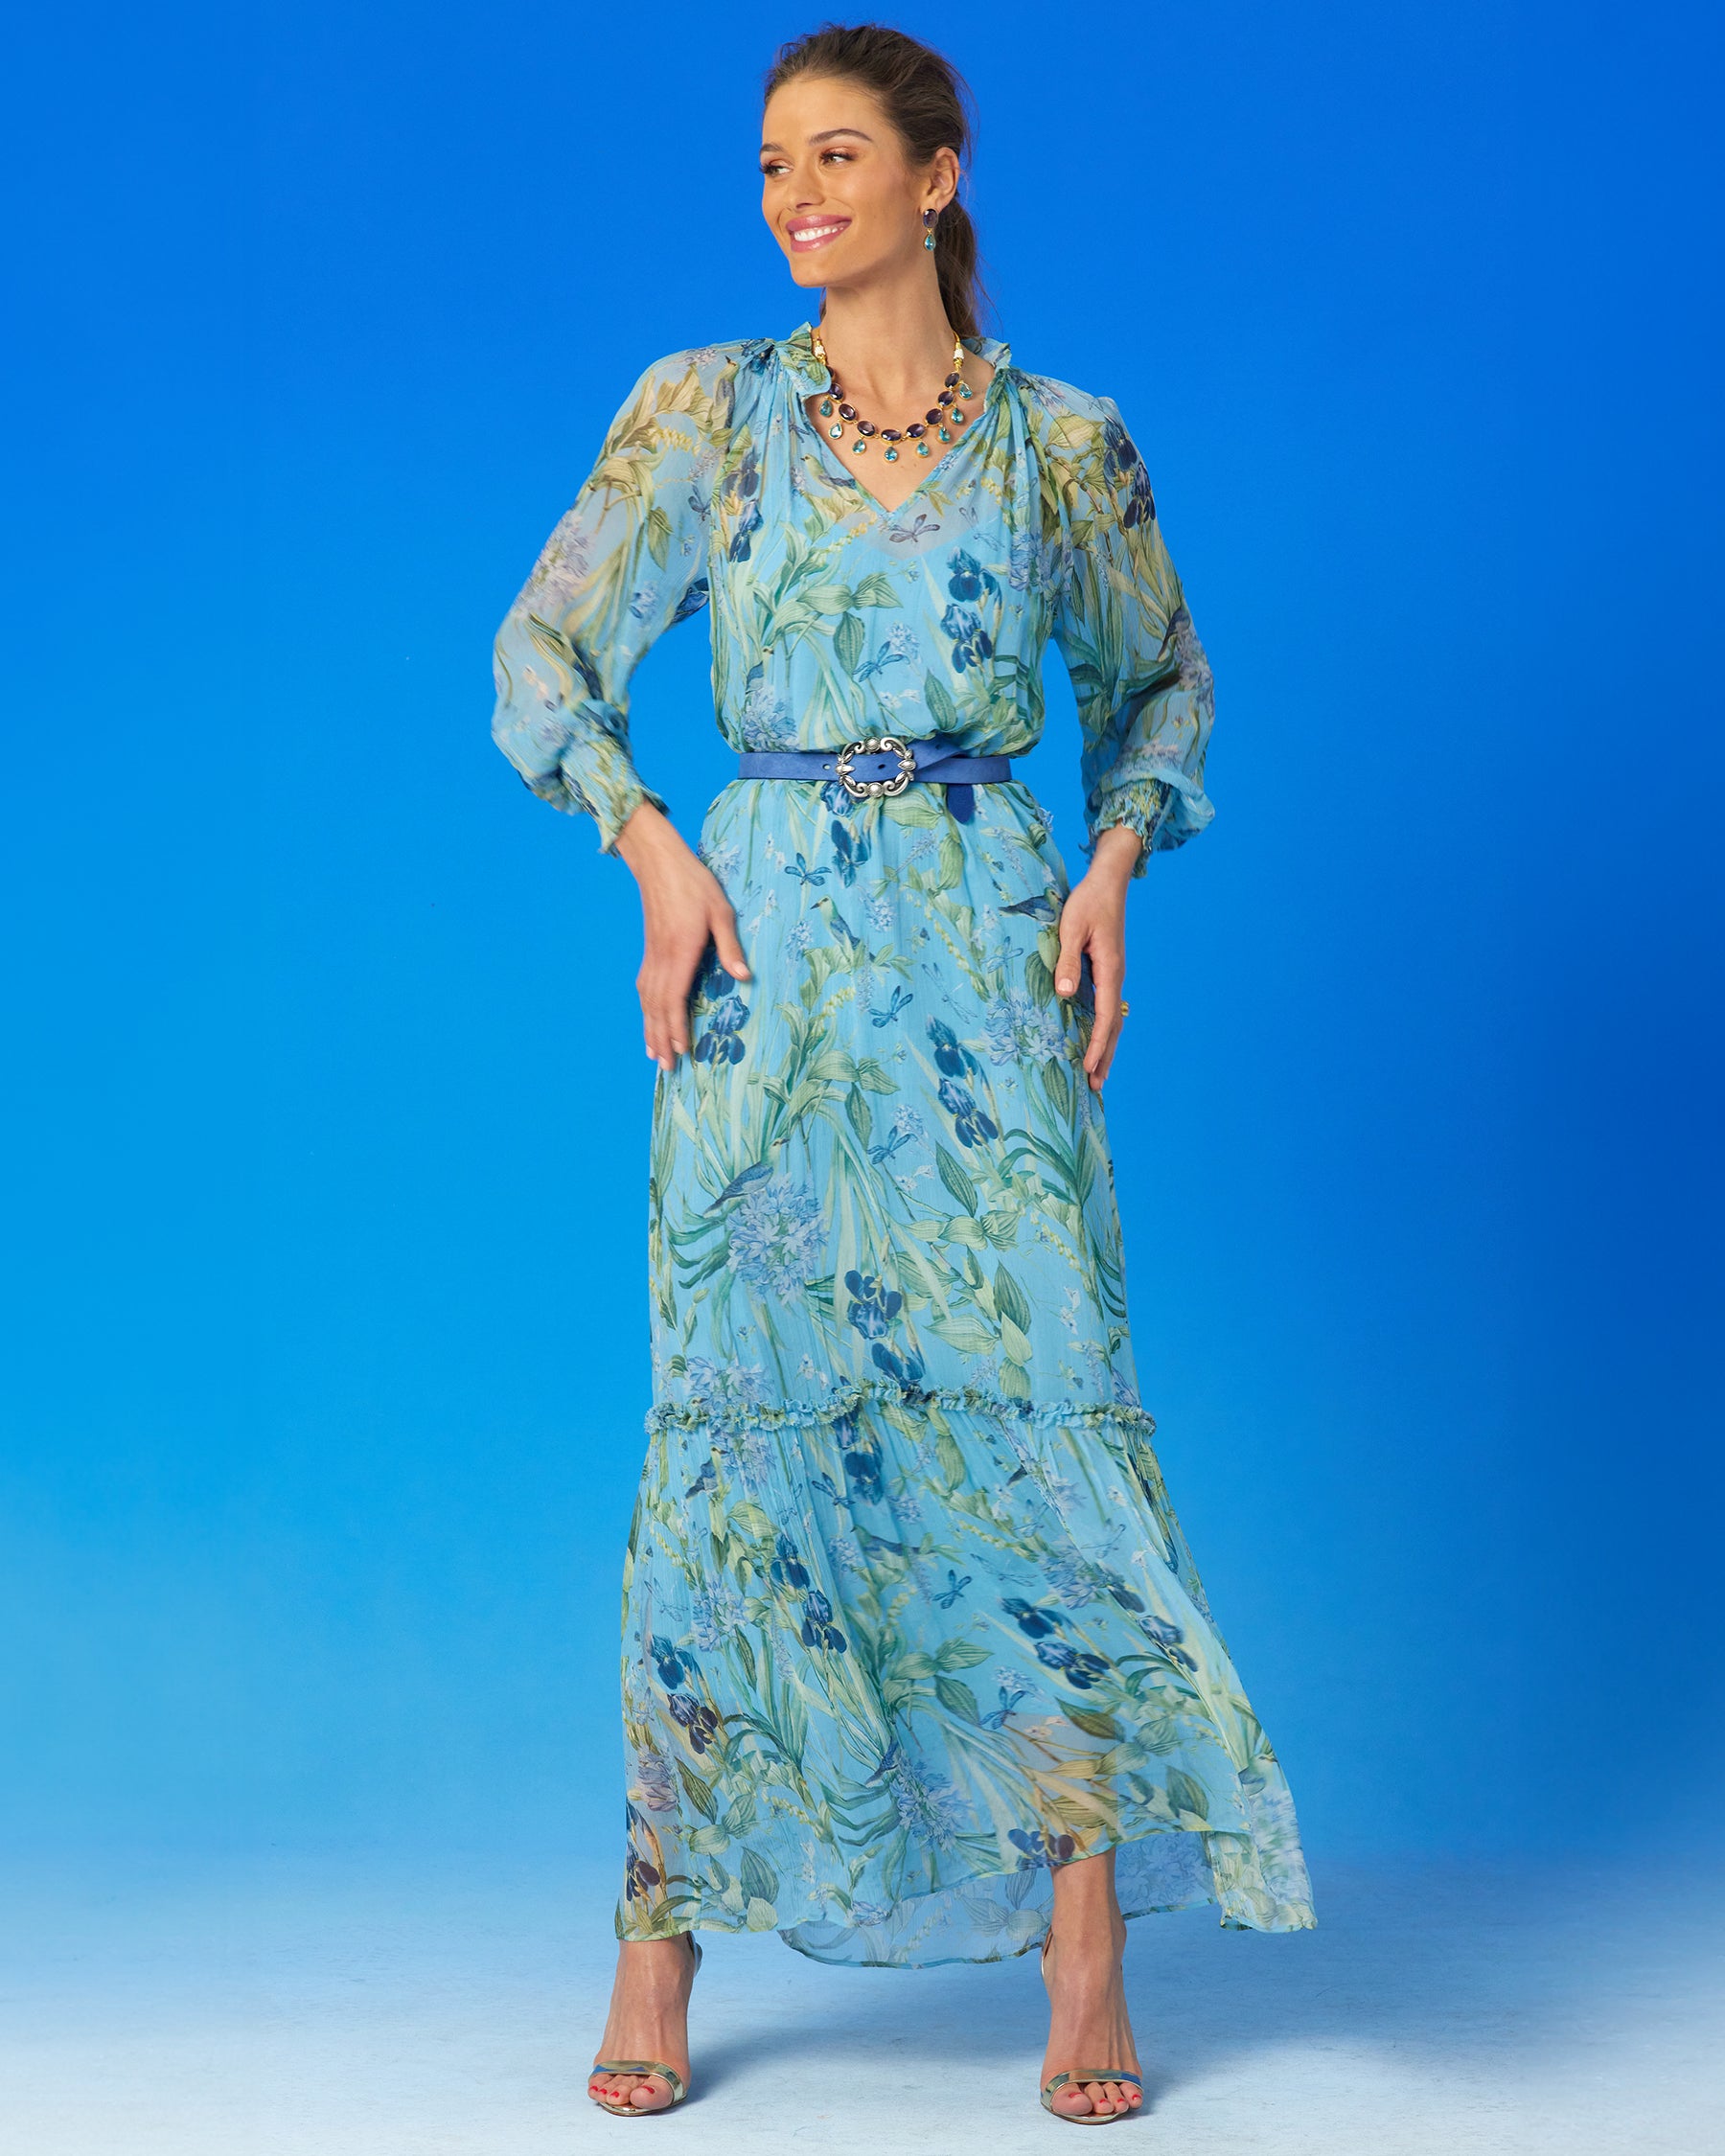 NicoBlu® Iris Sheath Dress in Elysian Meadow